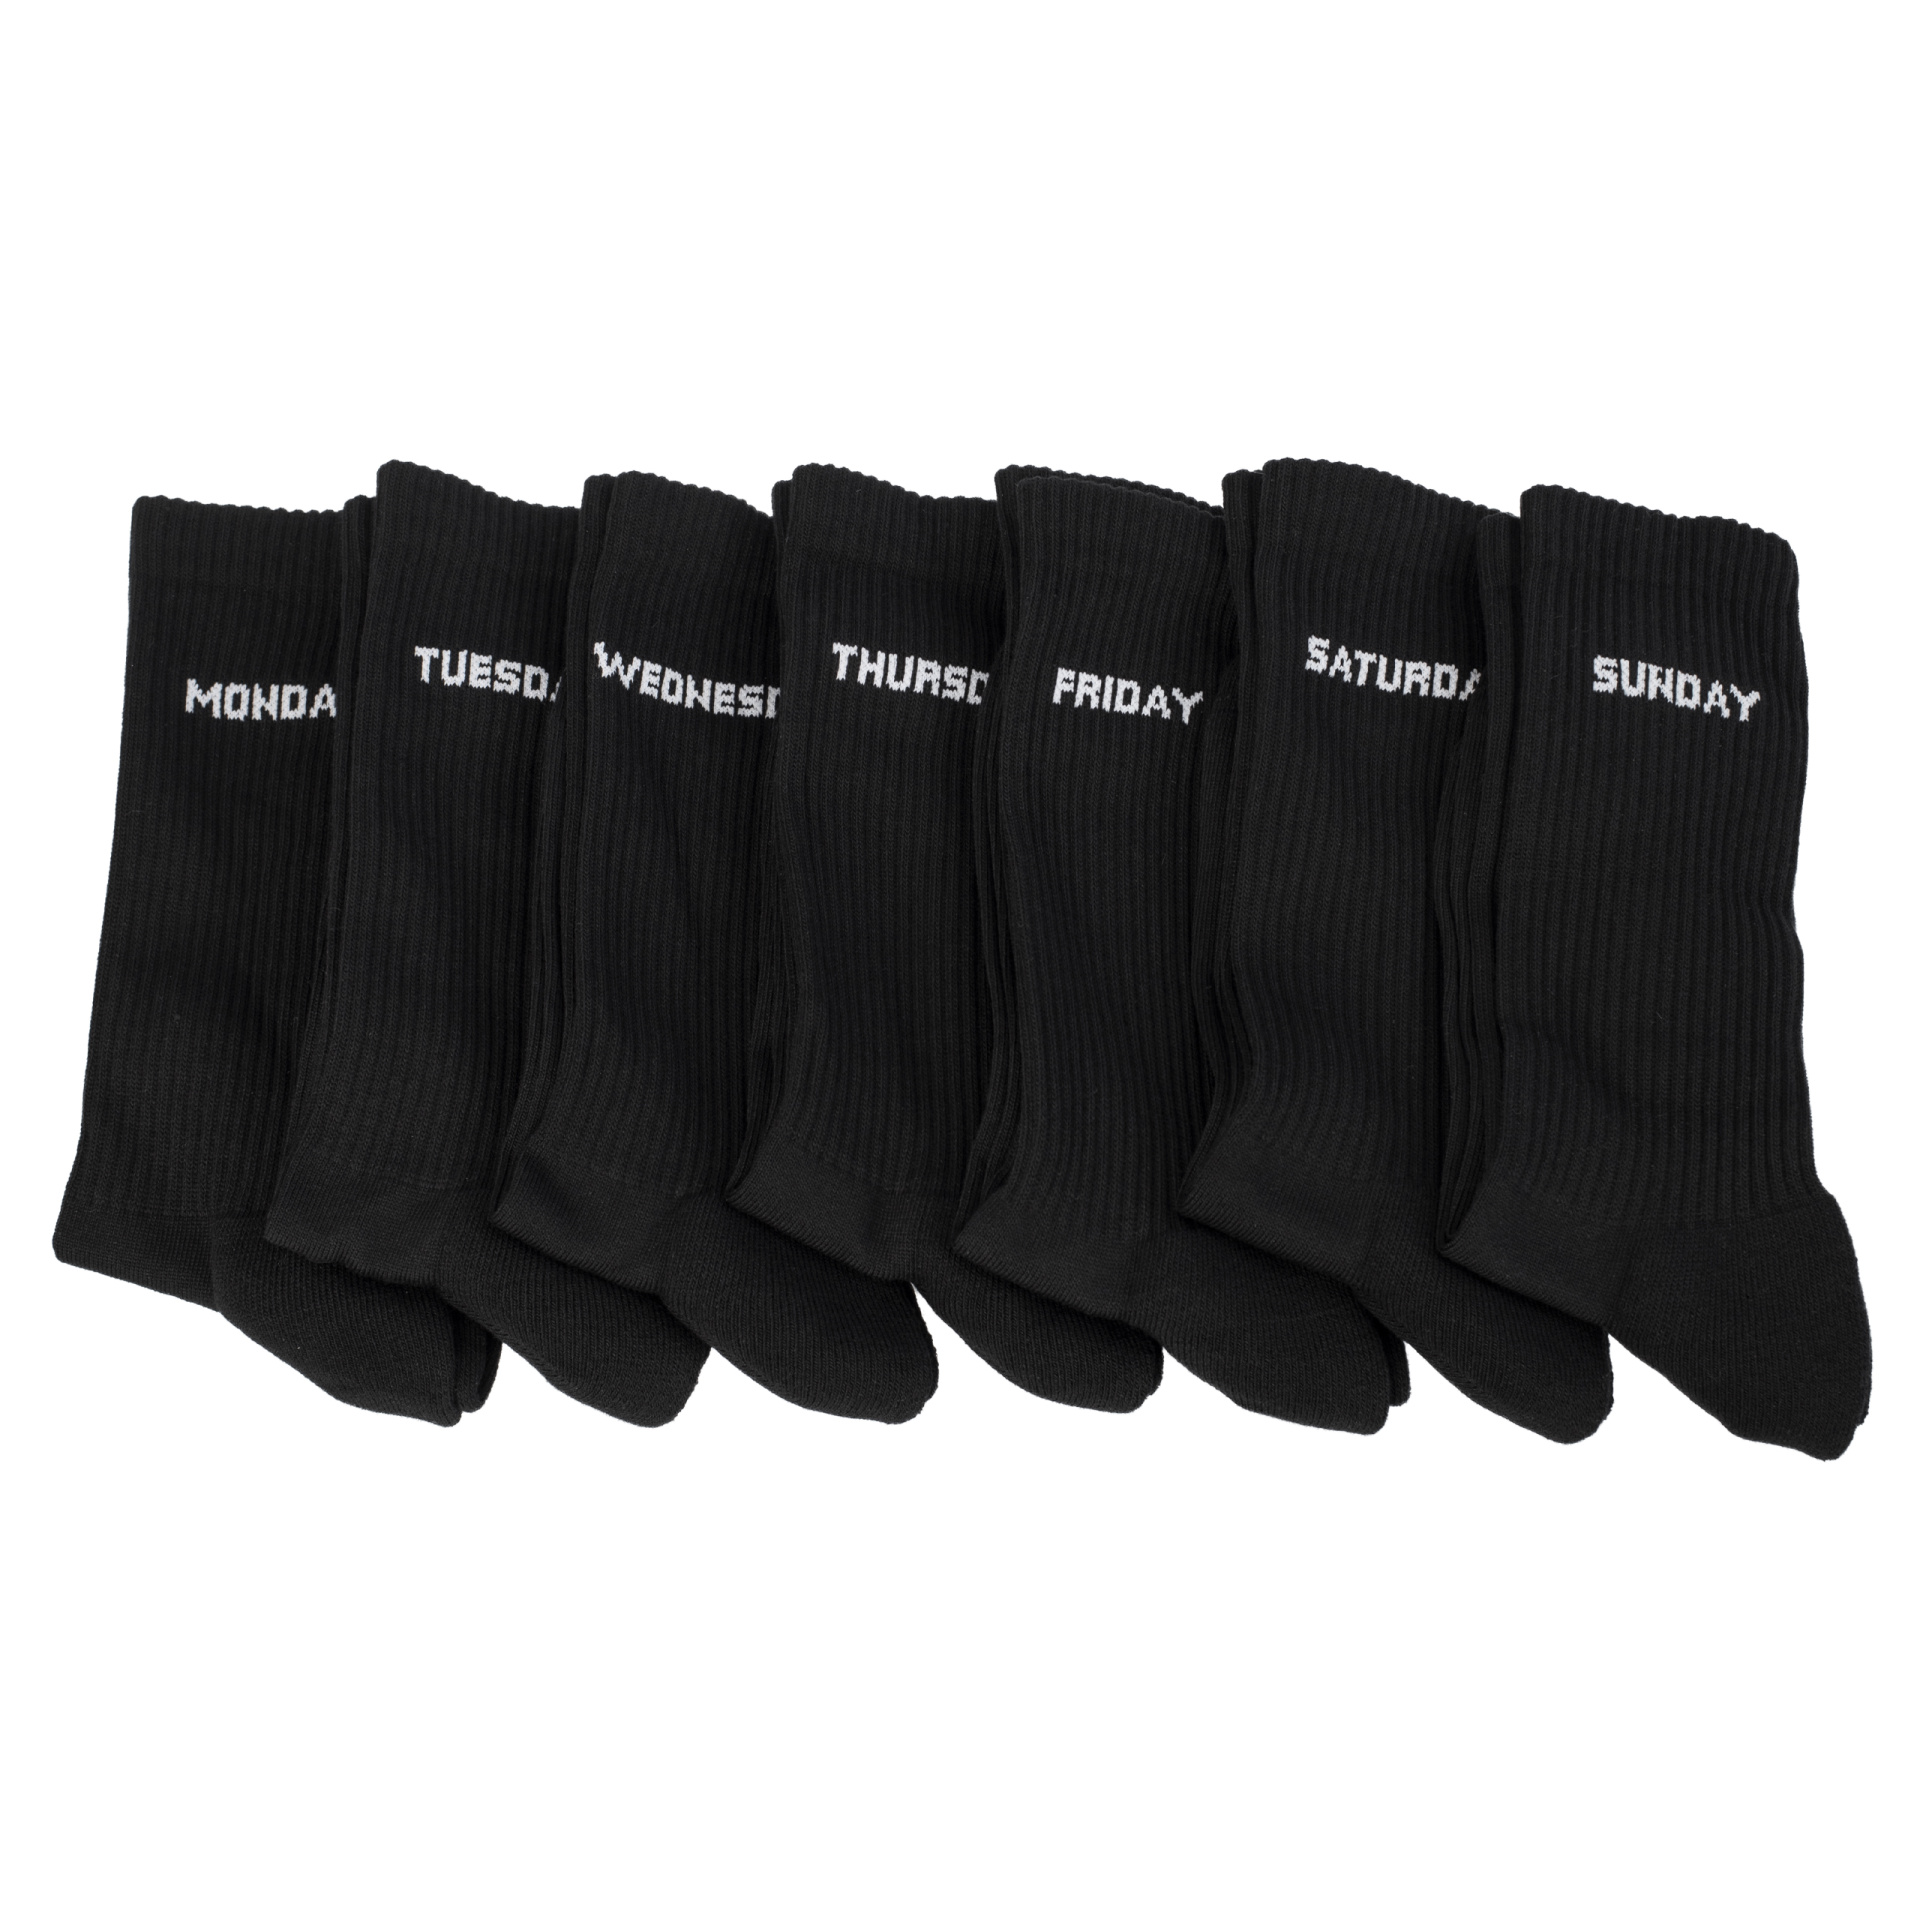 Balenciaga 7 Days Socks Pack in black